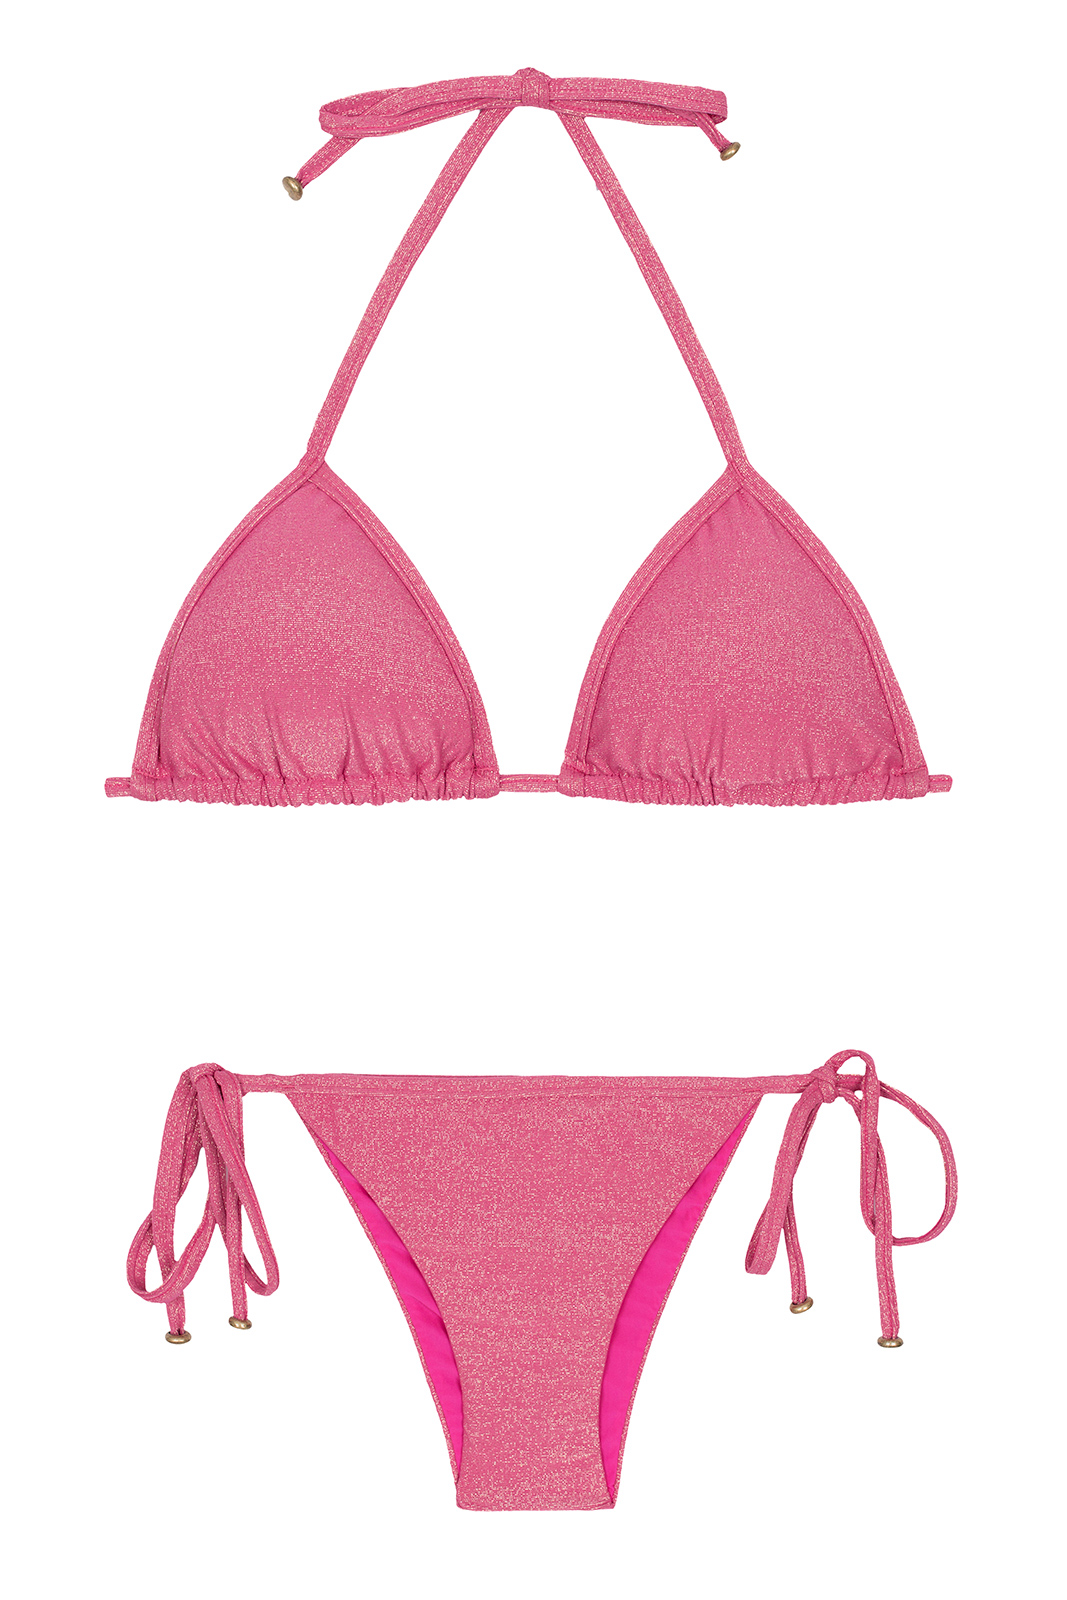 Shiny Pink Lurex Brazilian Swimsuit - Radiante Rosa Tri - Rio de Sol